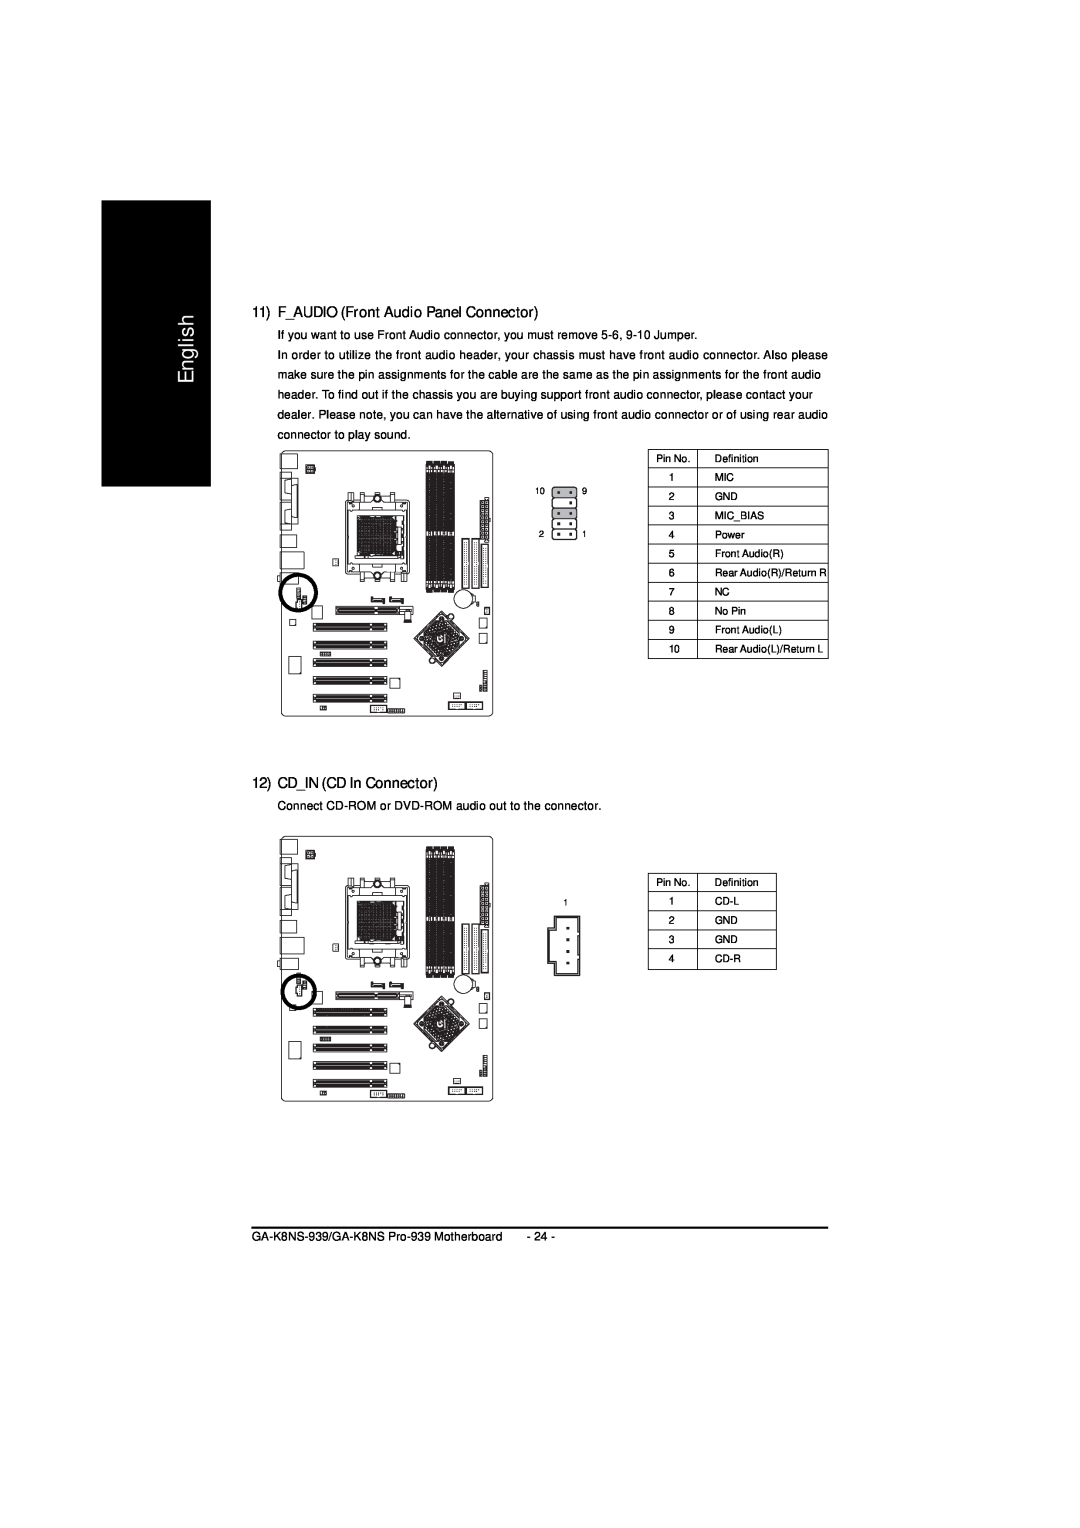 AMD GA-K8NS PRO-939, GA-K8NS-939 user manual FAUDIO Front Audio Panel Connector, CDIN CD In Connector, English 